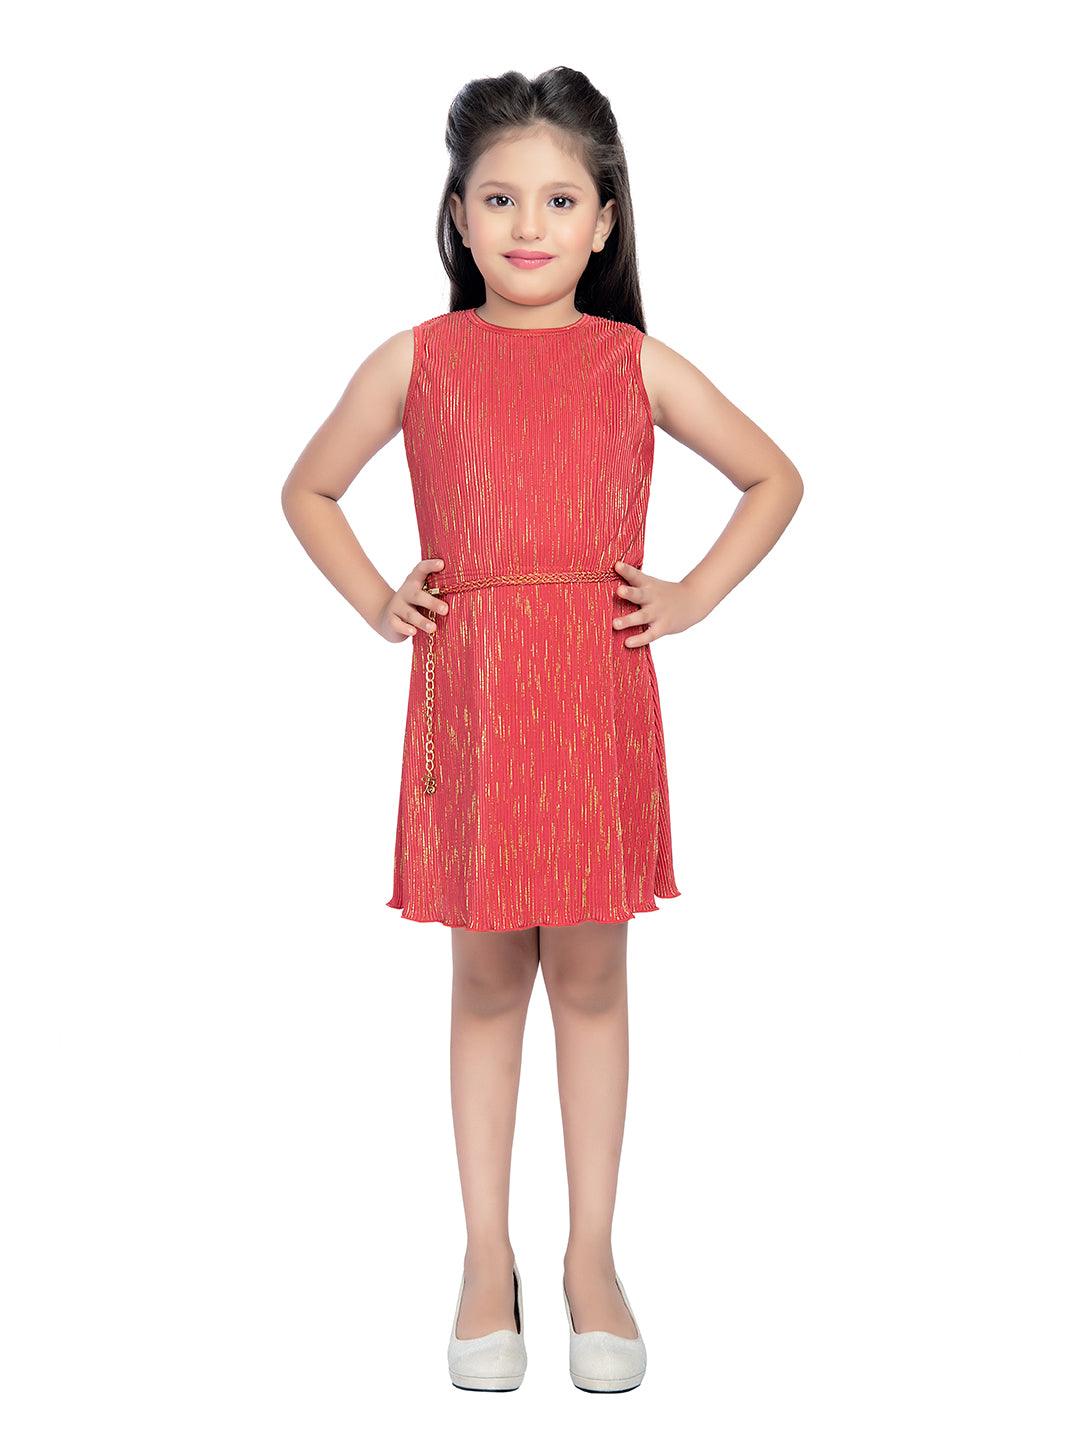 Tiny Baby B. Orange Colored Dress - 2137 B. Orange - TINY BABY INDIA shop.tinybaby.in